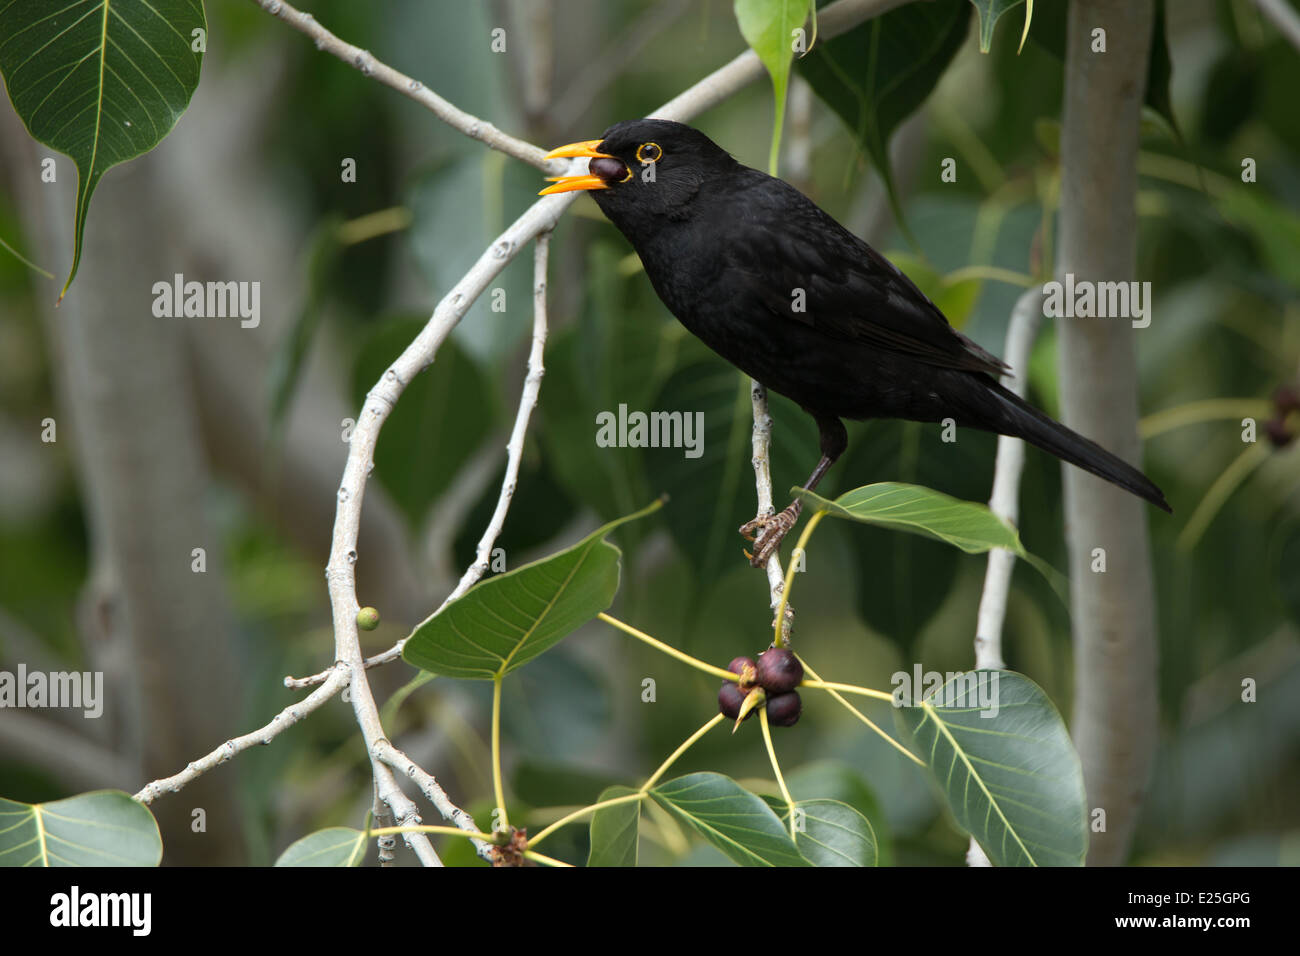 A male Blackbird eating cherries Stock Photo